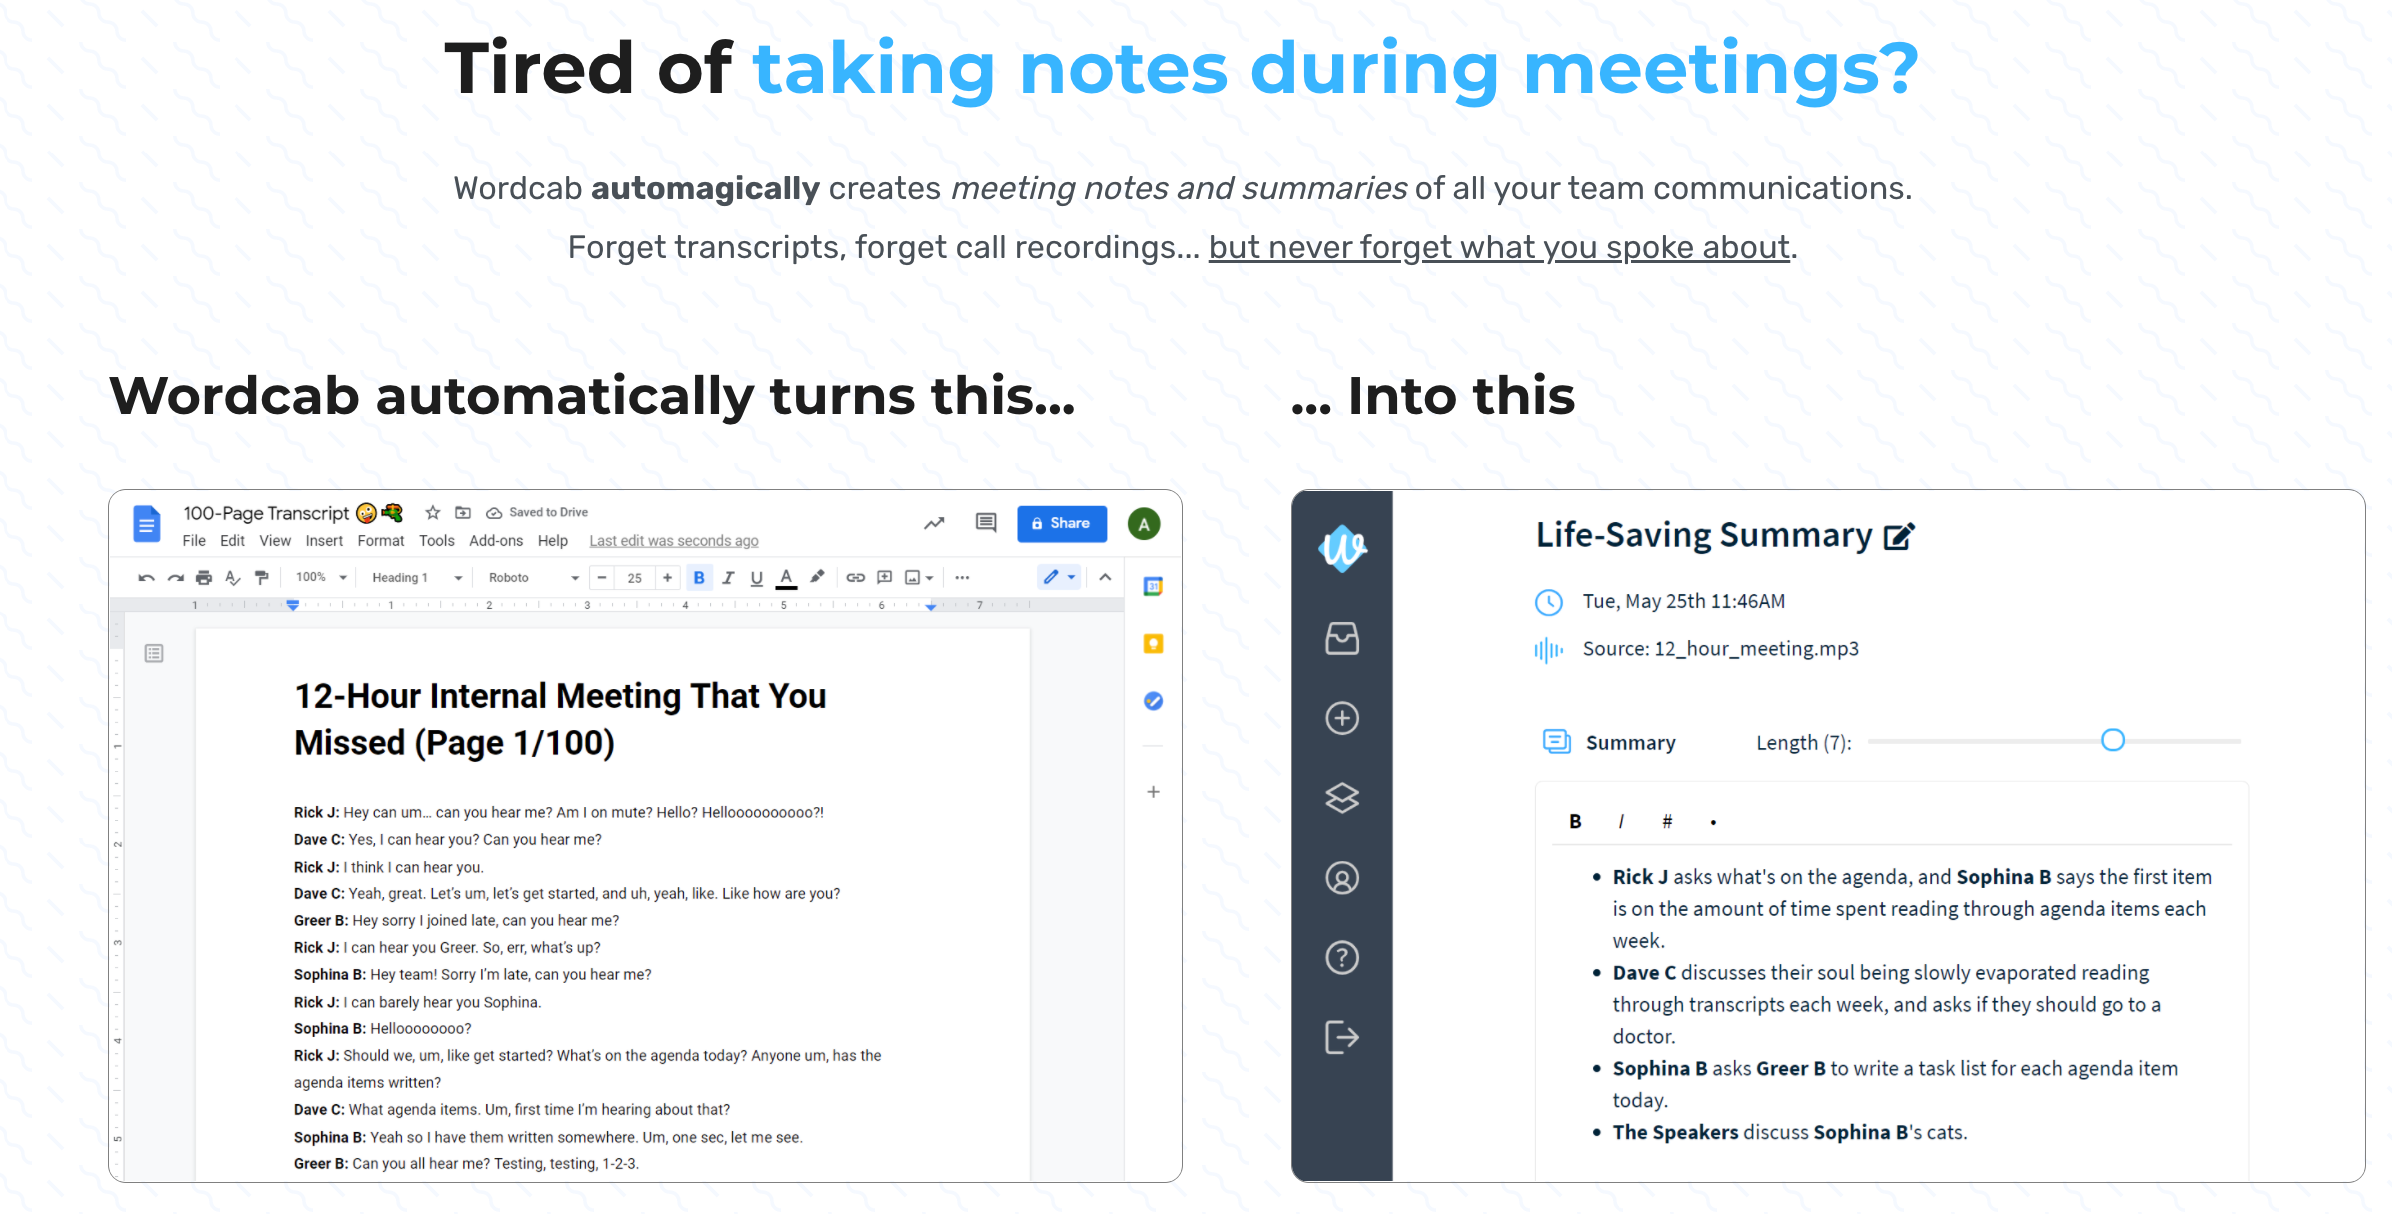 AI notetaker to transcribe, summarize, analyze meetings